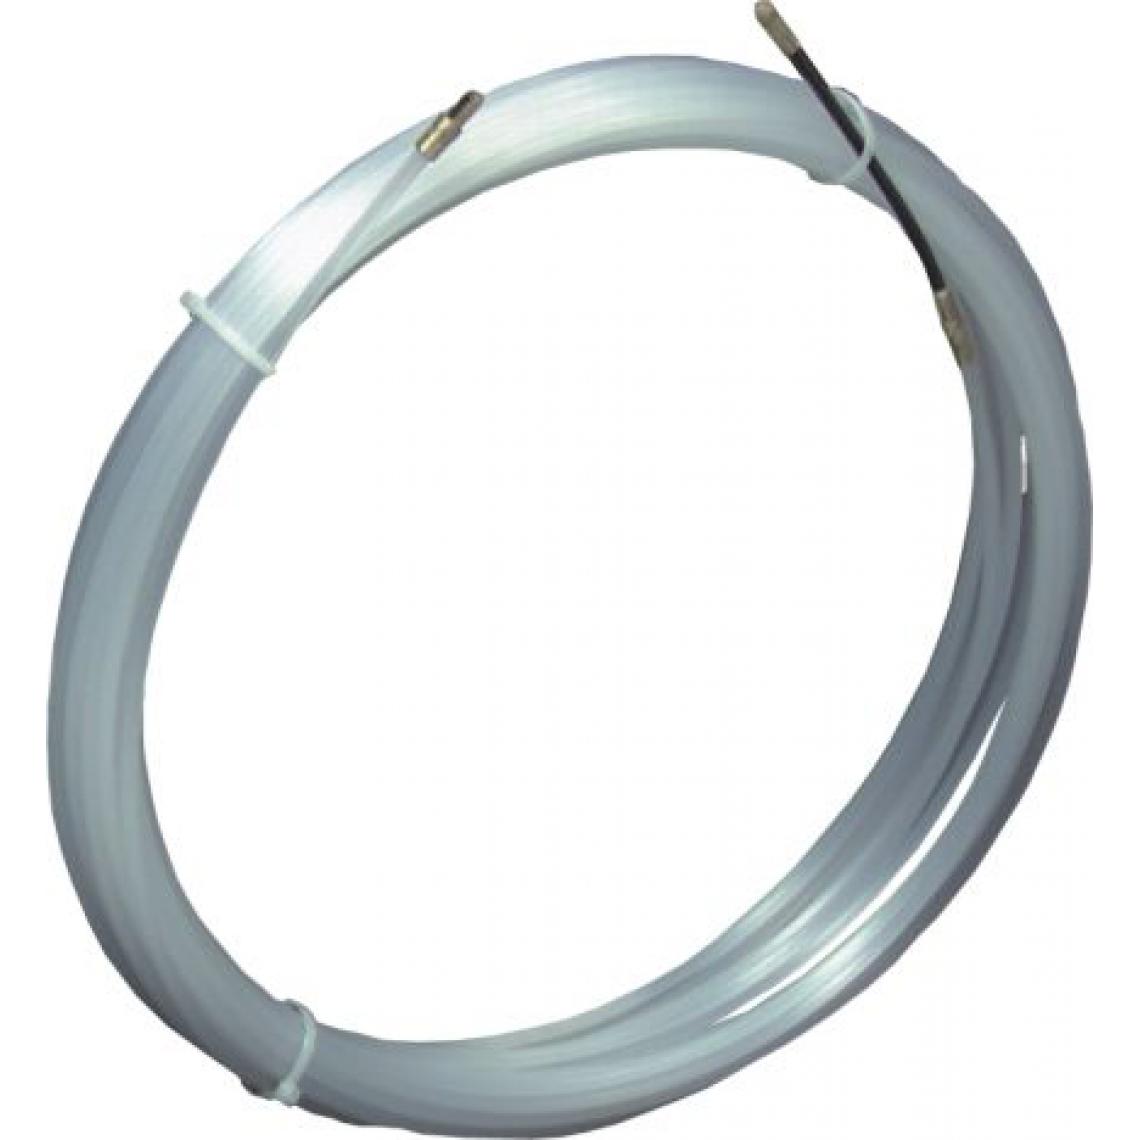 Dio - Tire fil nylon diamètre 4mm - Longueur 25m - Gaines ICTA